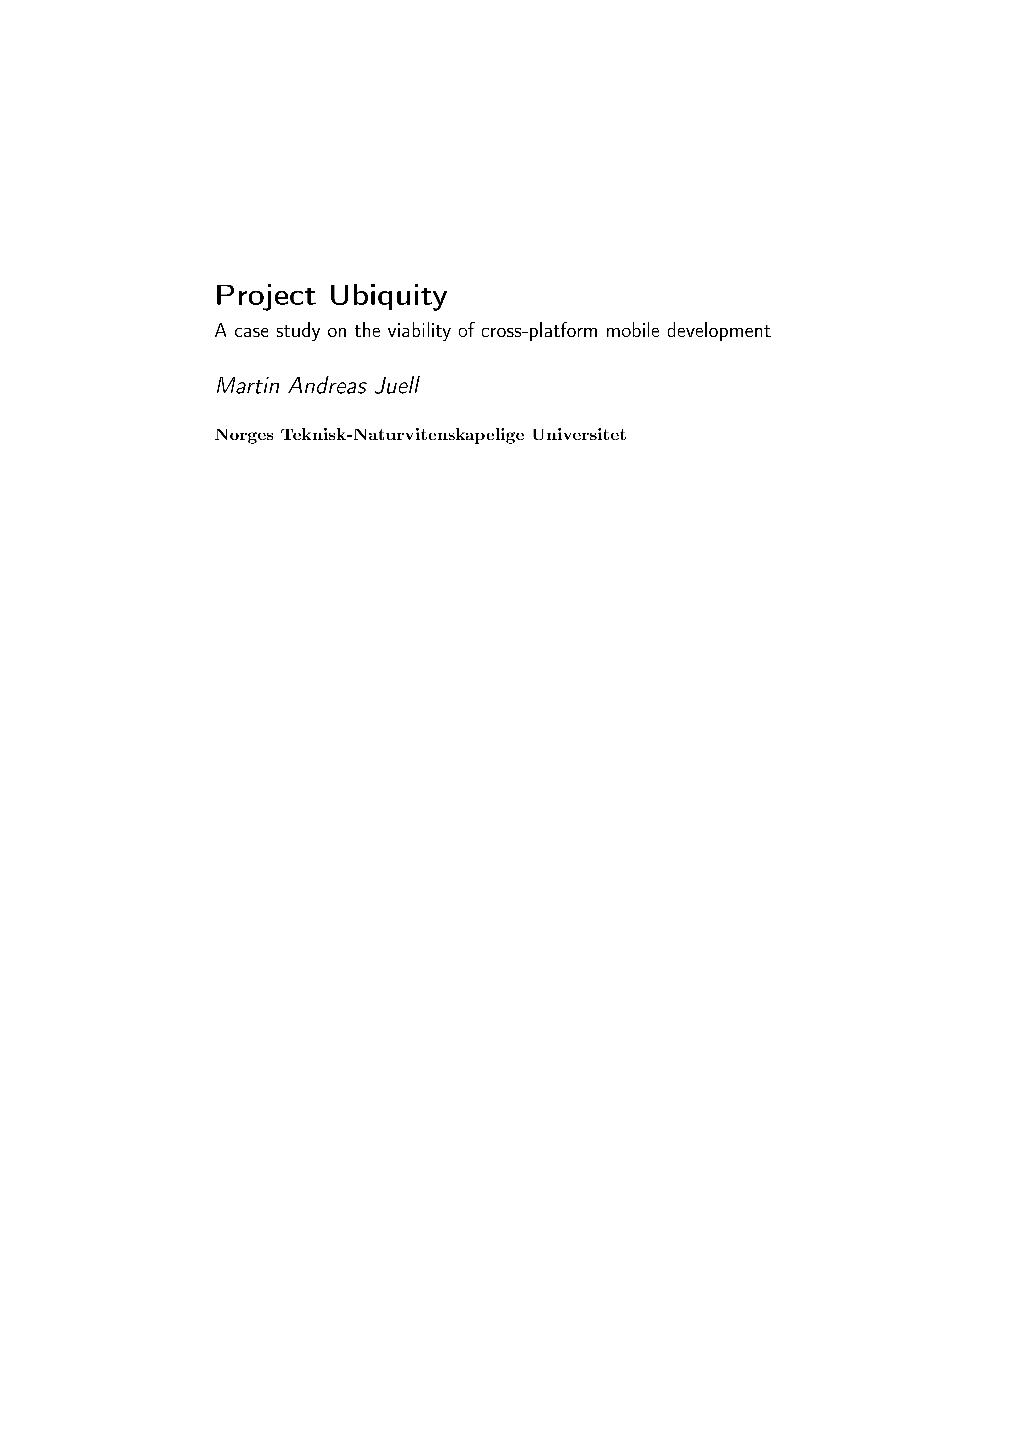 Project Ubiquity a Case Study on the Viability of Cross-Platform Mobile Development